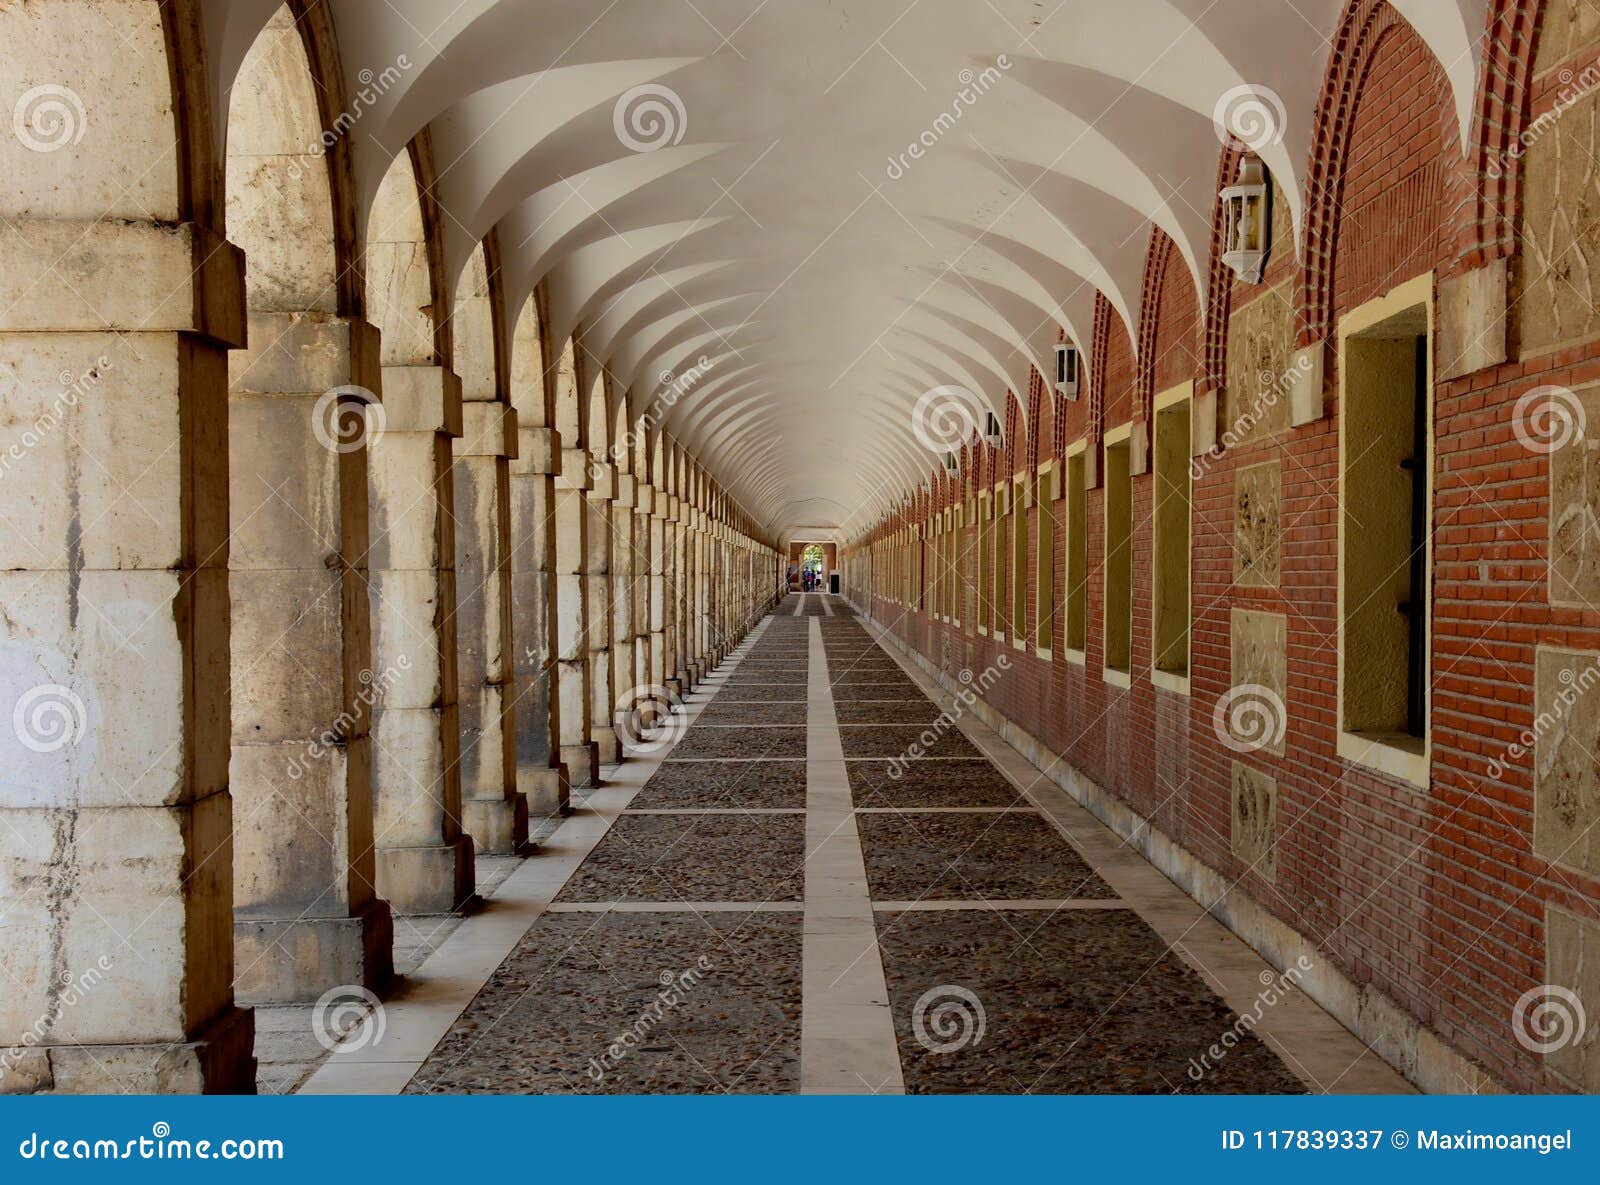 corridor in the royal palace of aranjuez